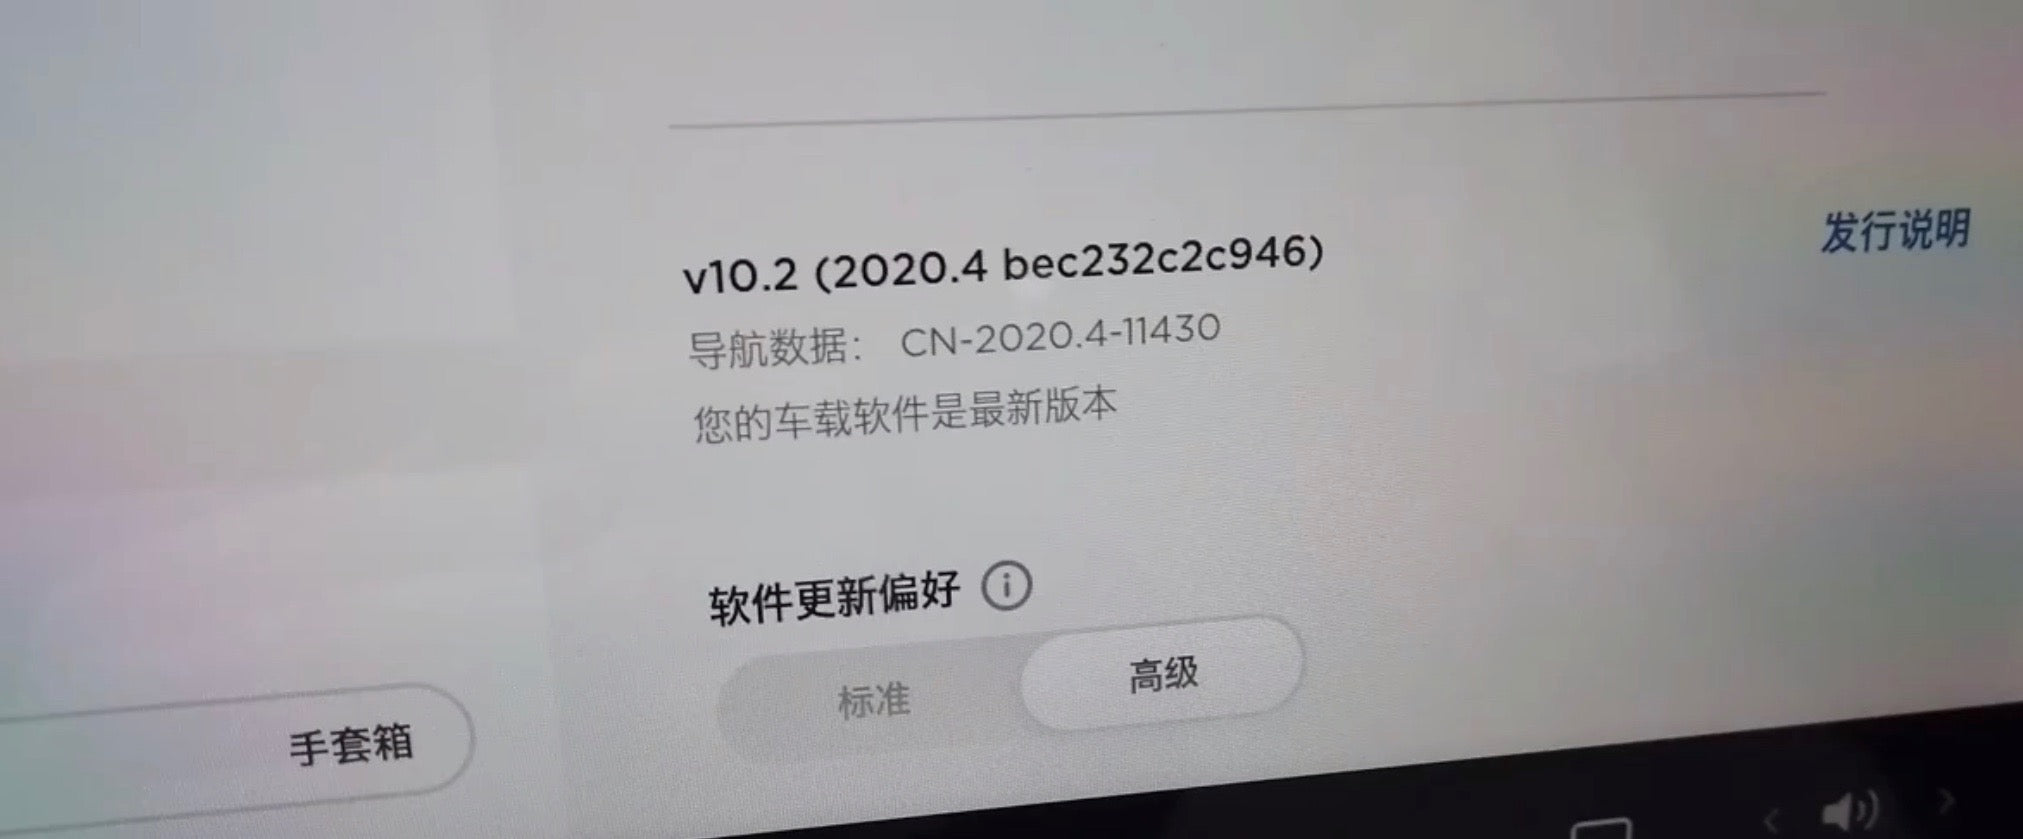 Tesla-China-V10.2-2020.4